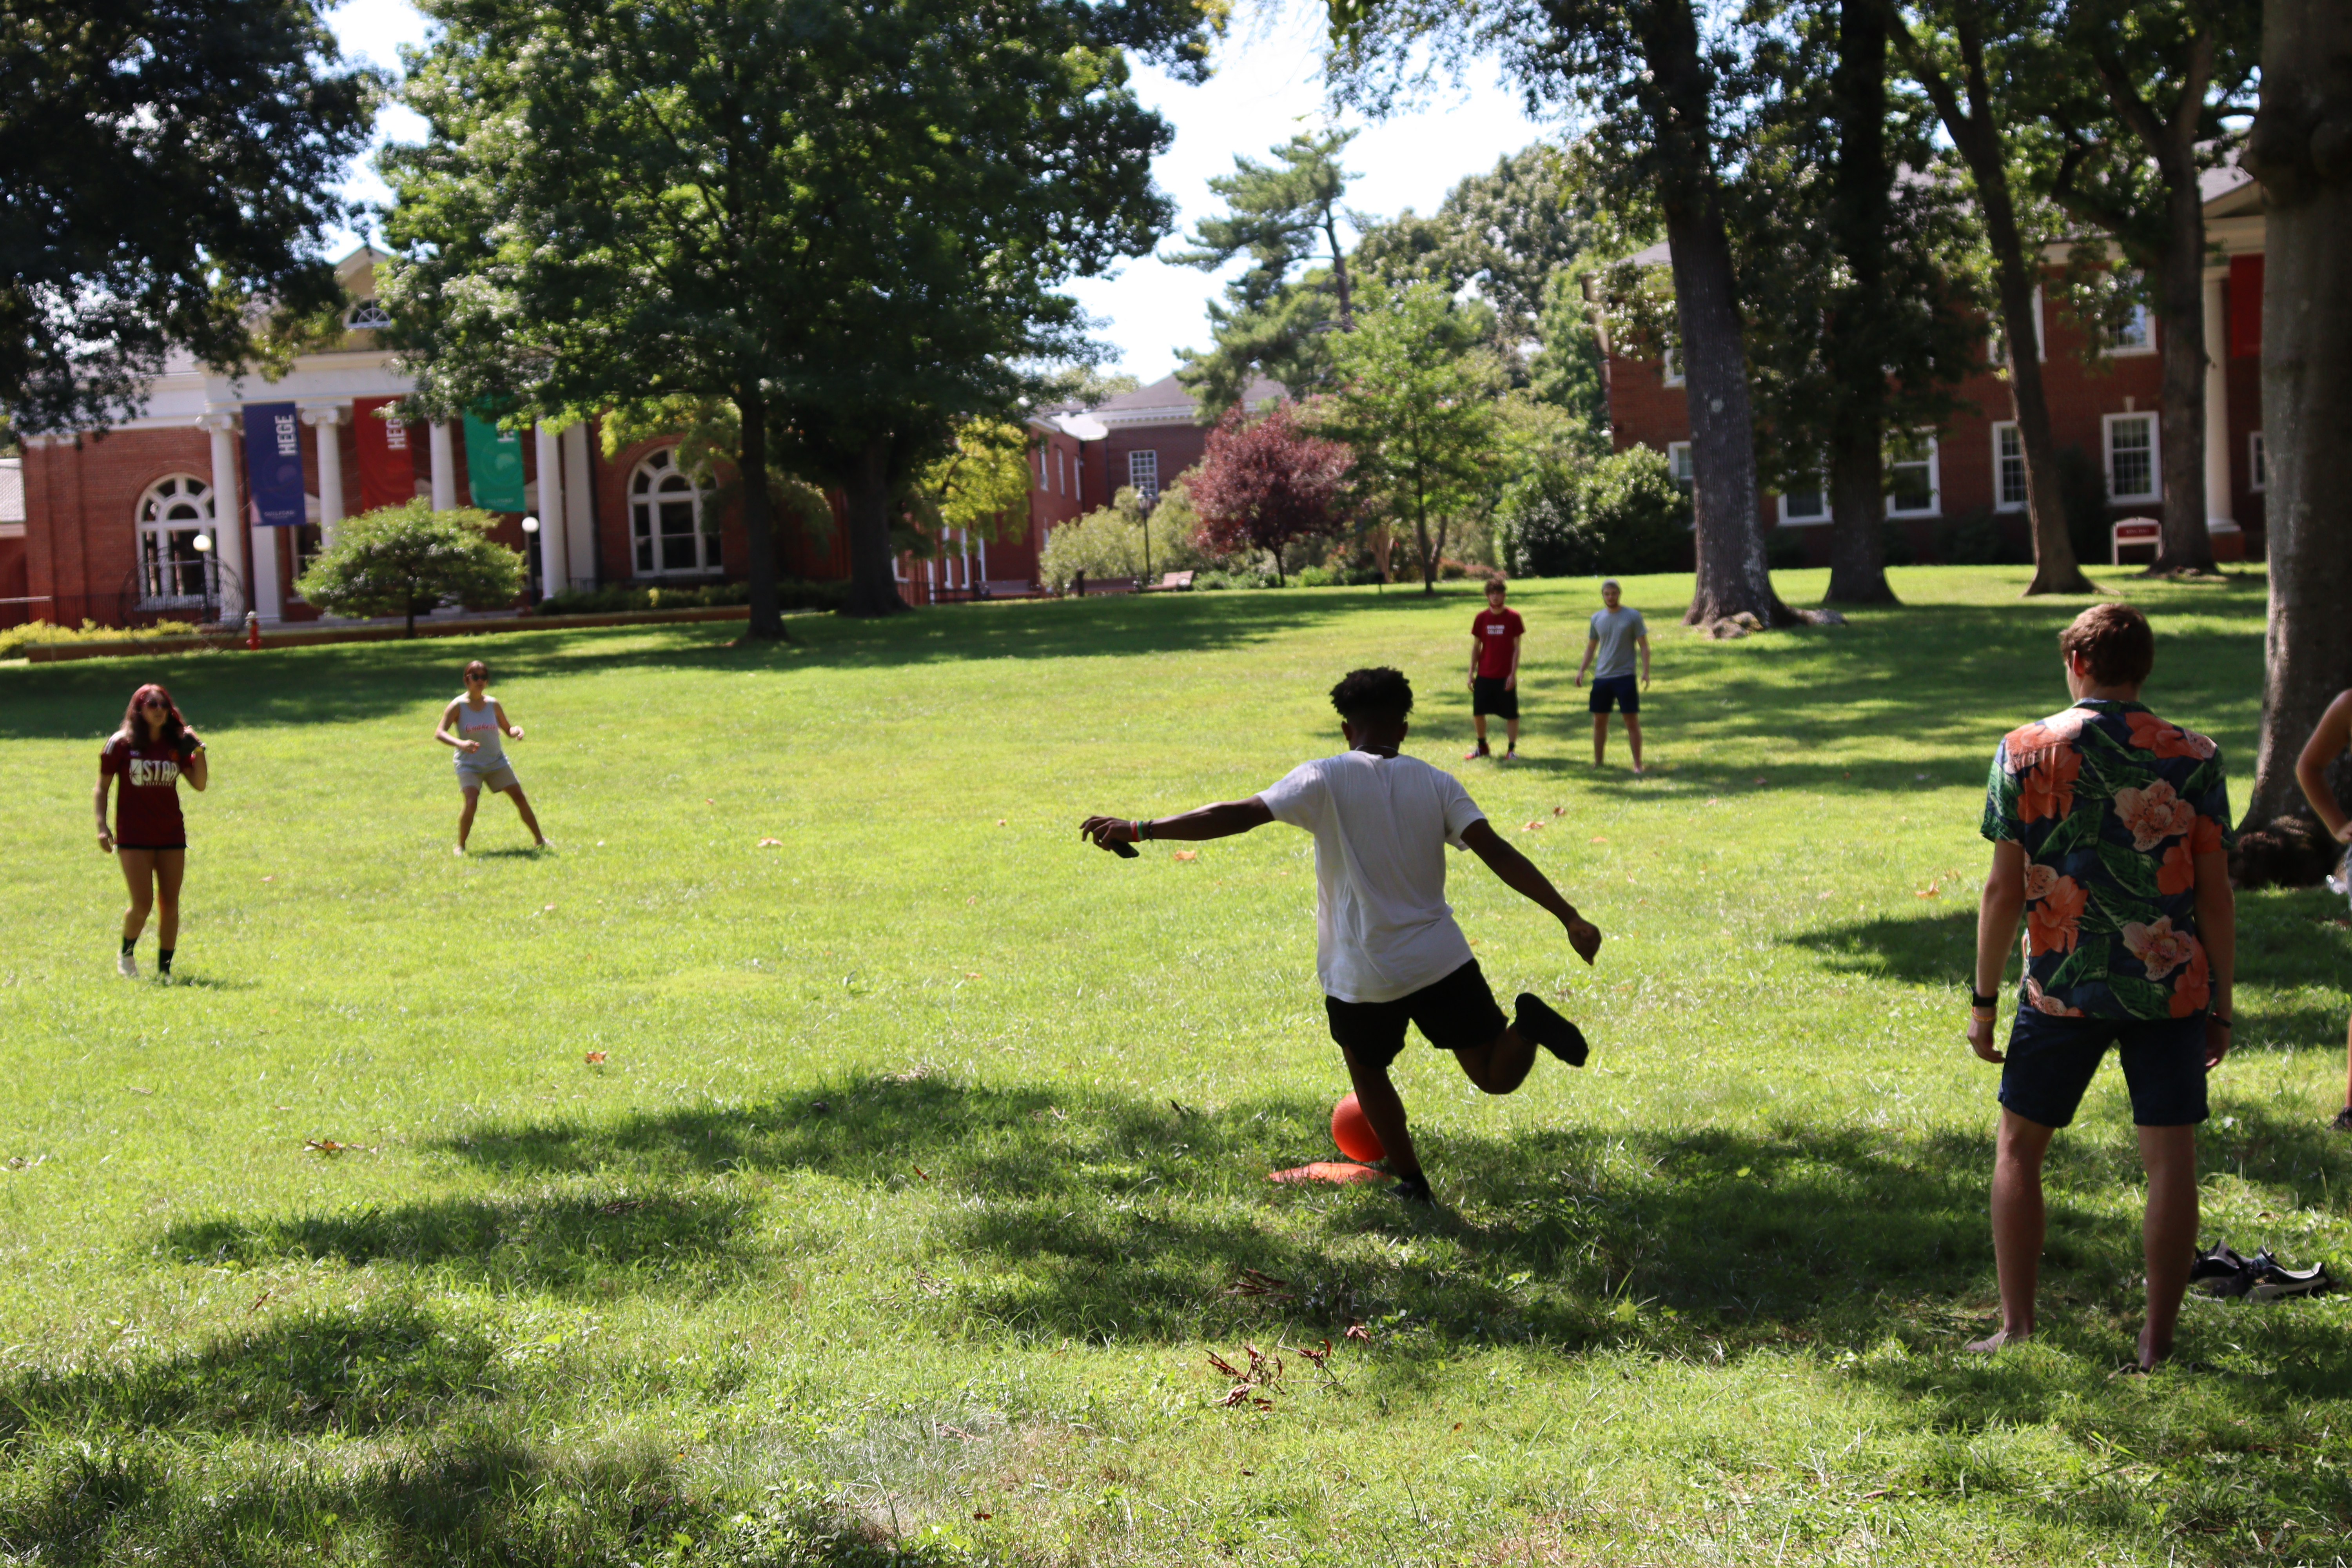 A student kicks the ball during a kick ball game on the Quad.